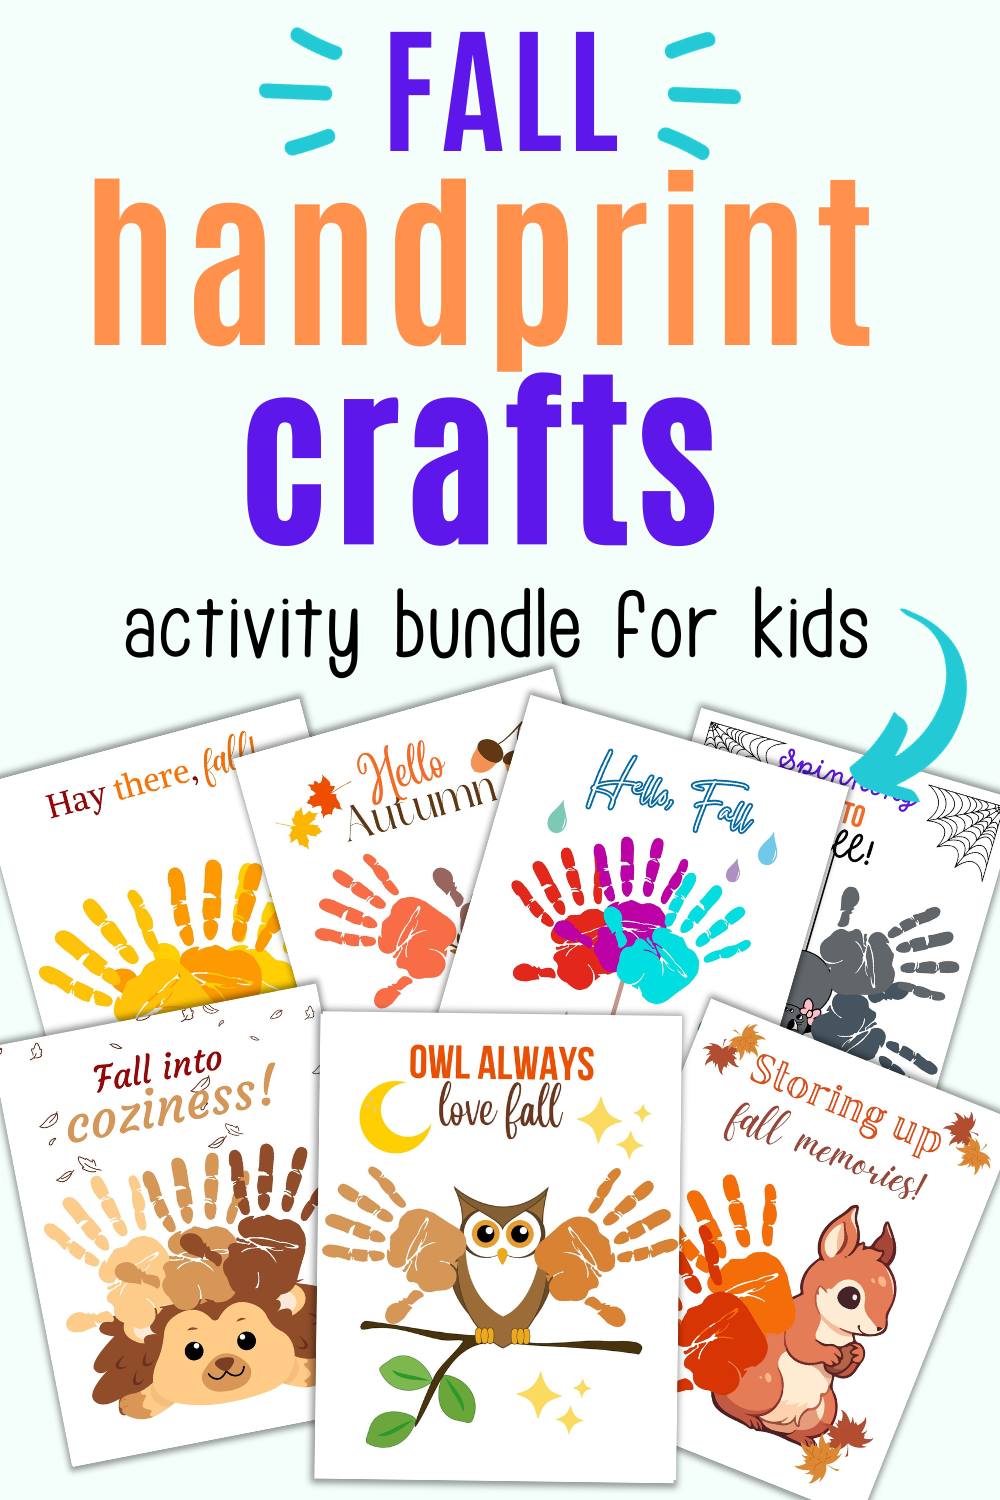 Text "fall handprint crafts activity bundle kids"